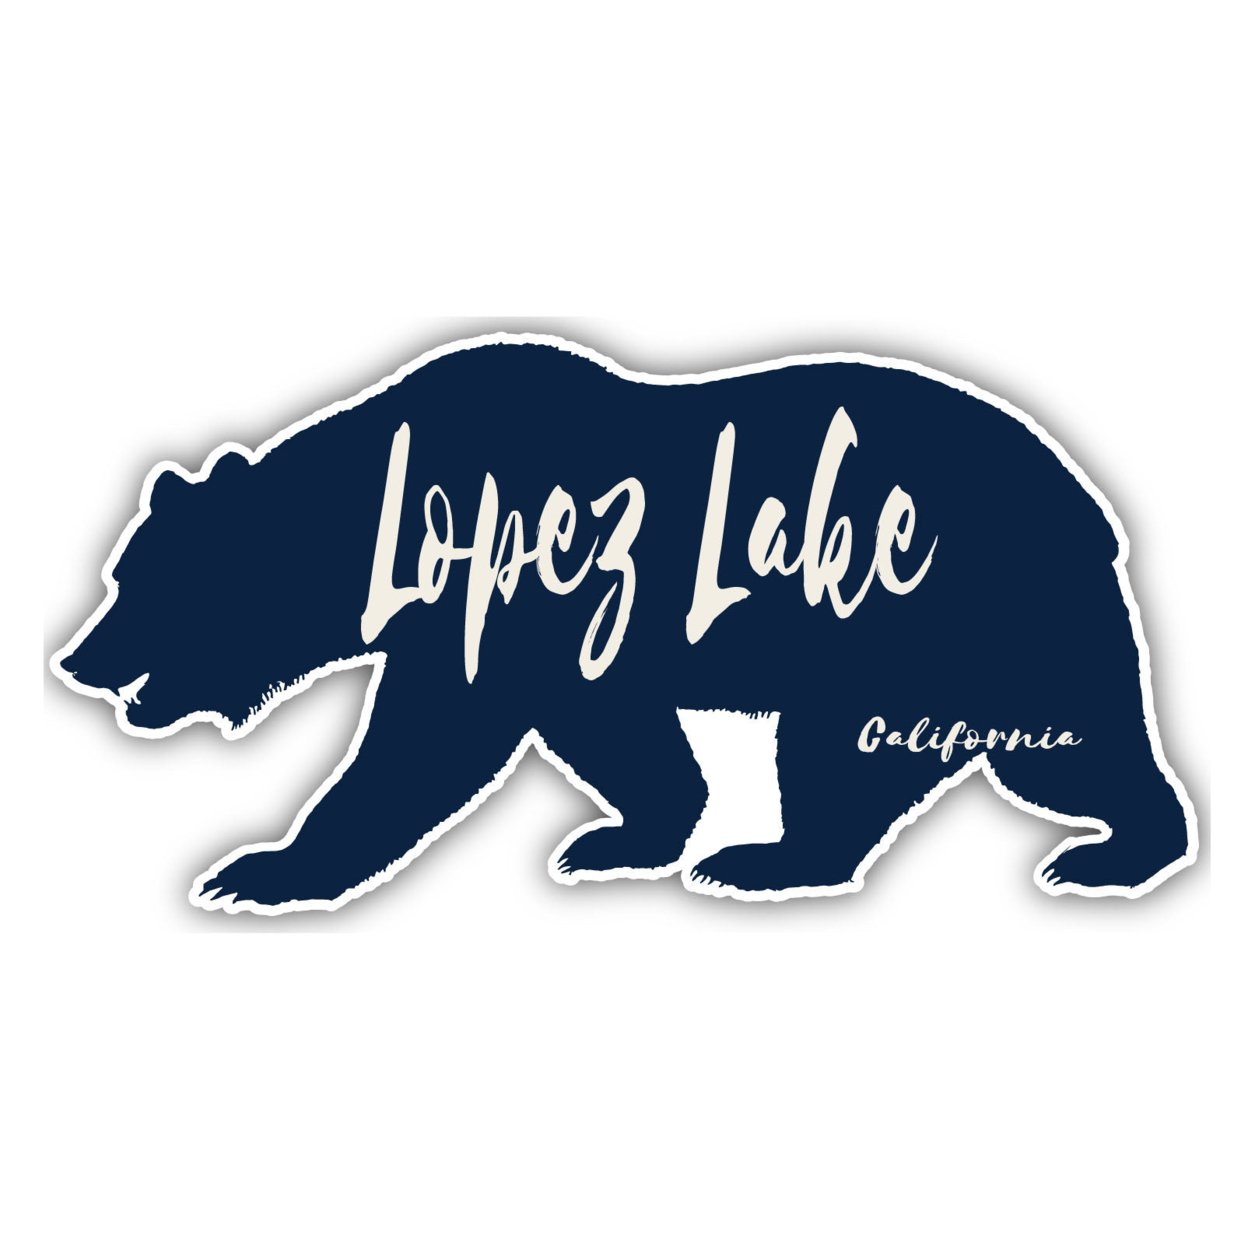 Lopez Lake California Souvenir Decorative Stickers (Choose Theme And Size) - 2-Inch, Tent